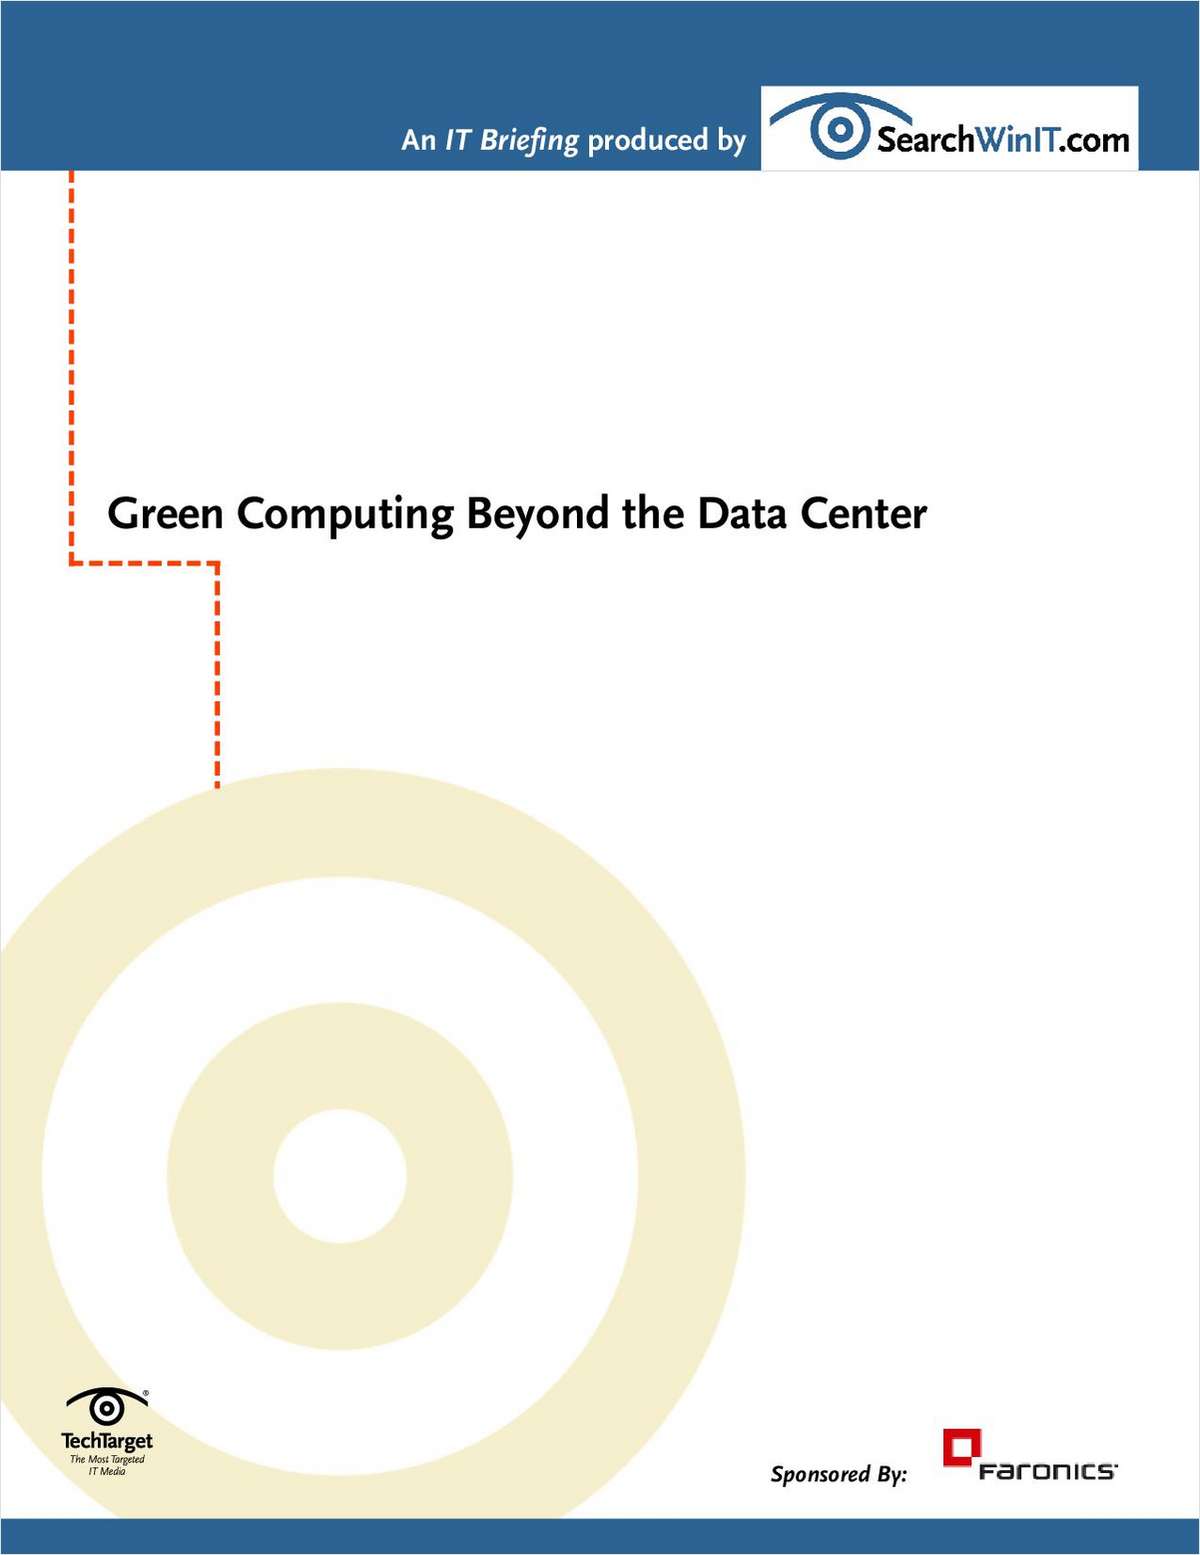 Green Computing Beyond The Datacenter